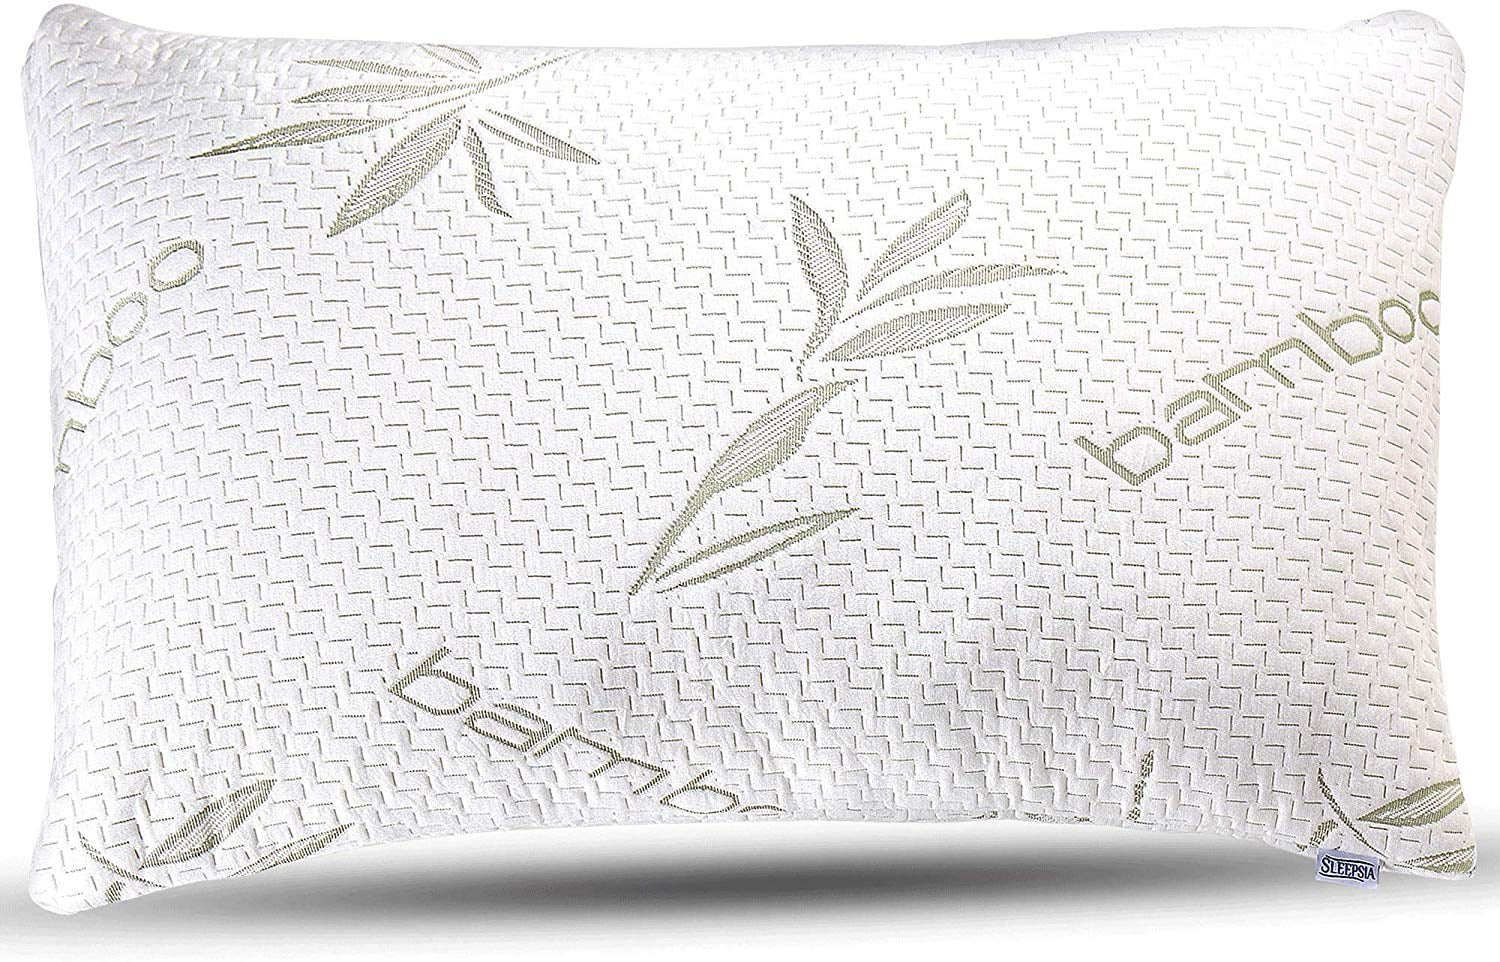 Queen King Hot Bamboo Pillow Memory Foam Hypoallergenic Cool Comfort MG 